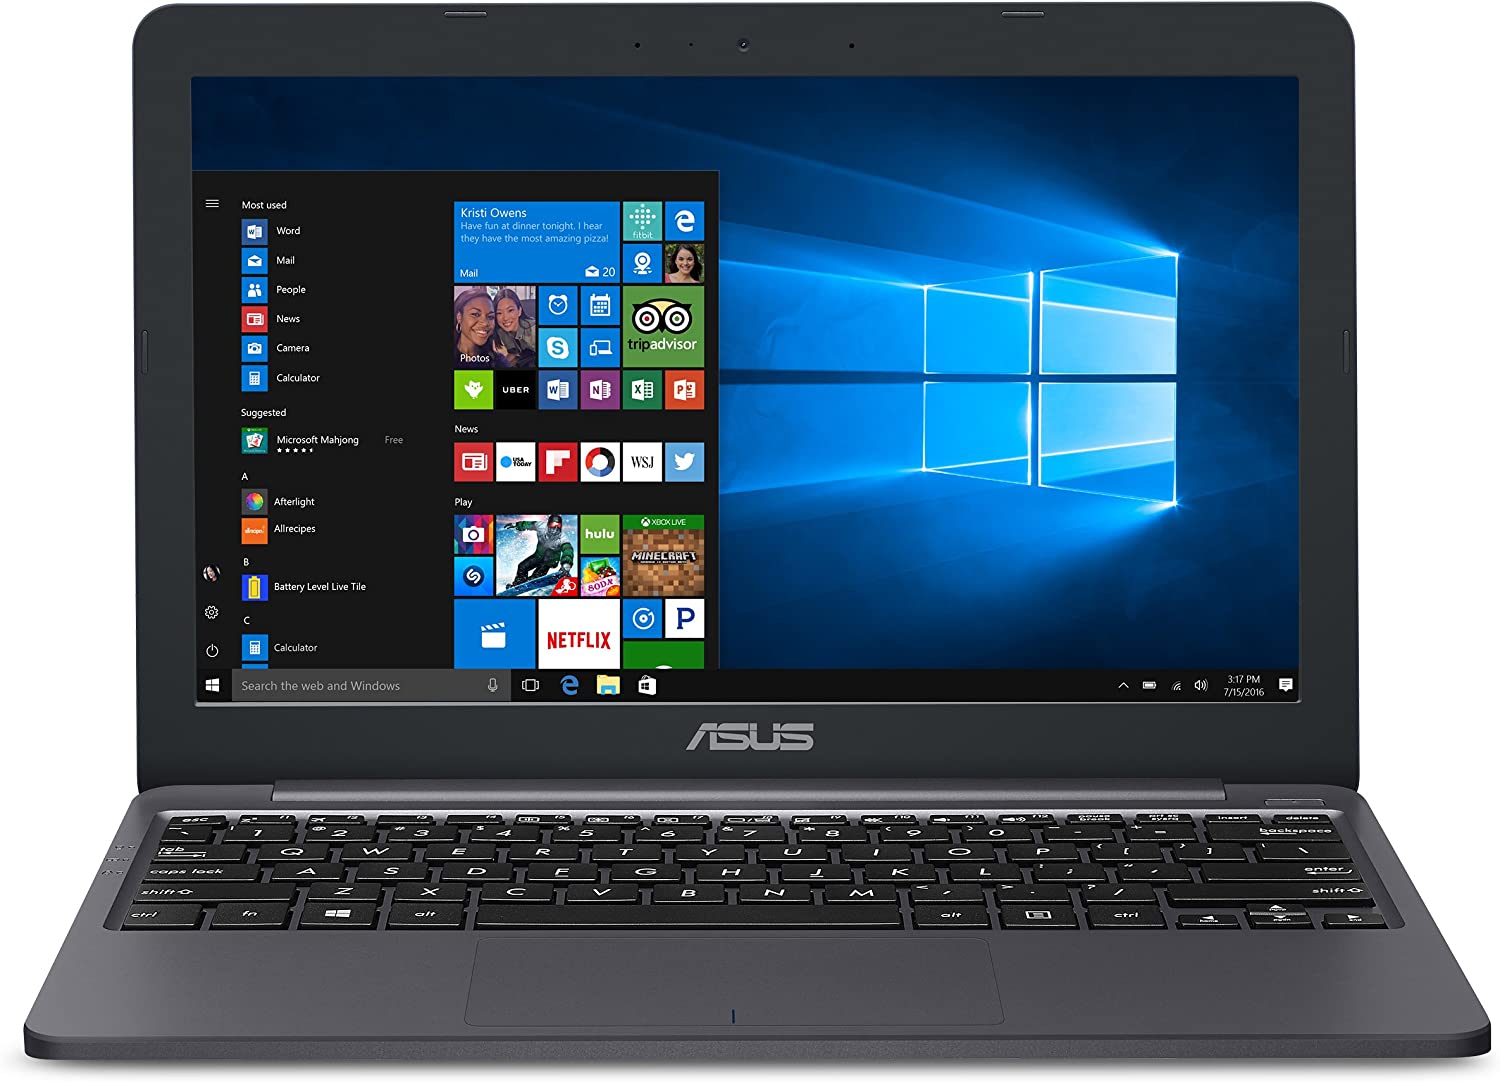 ASUS 11.6" PC Laptop, Intel Celeron N4000, 4GB RAM, 64GB SSD, Windows 10 in S Mode, Star Grey, L203MA-DS04 - image 1 of 5